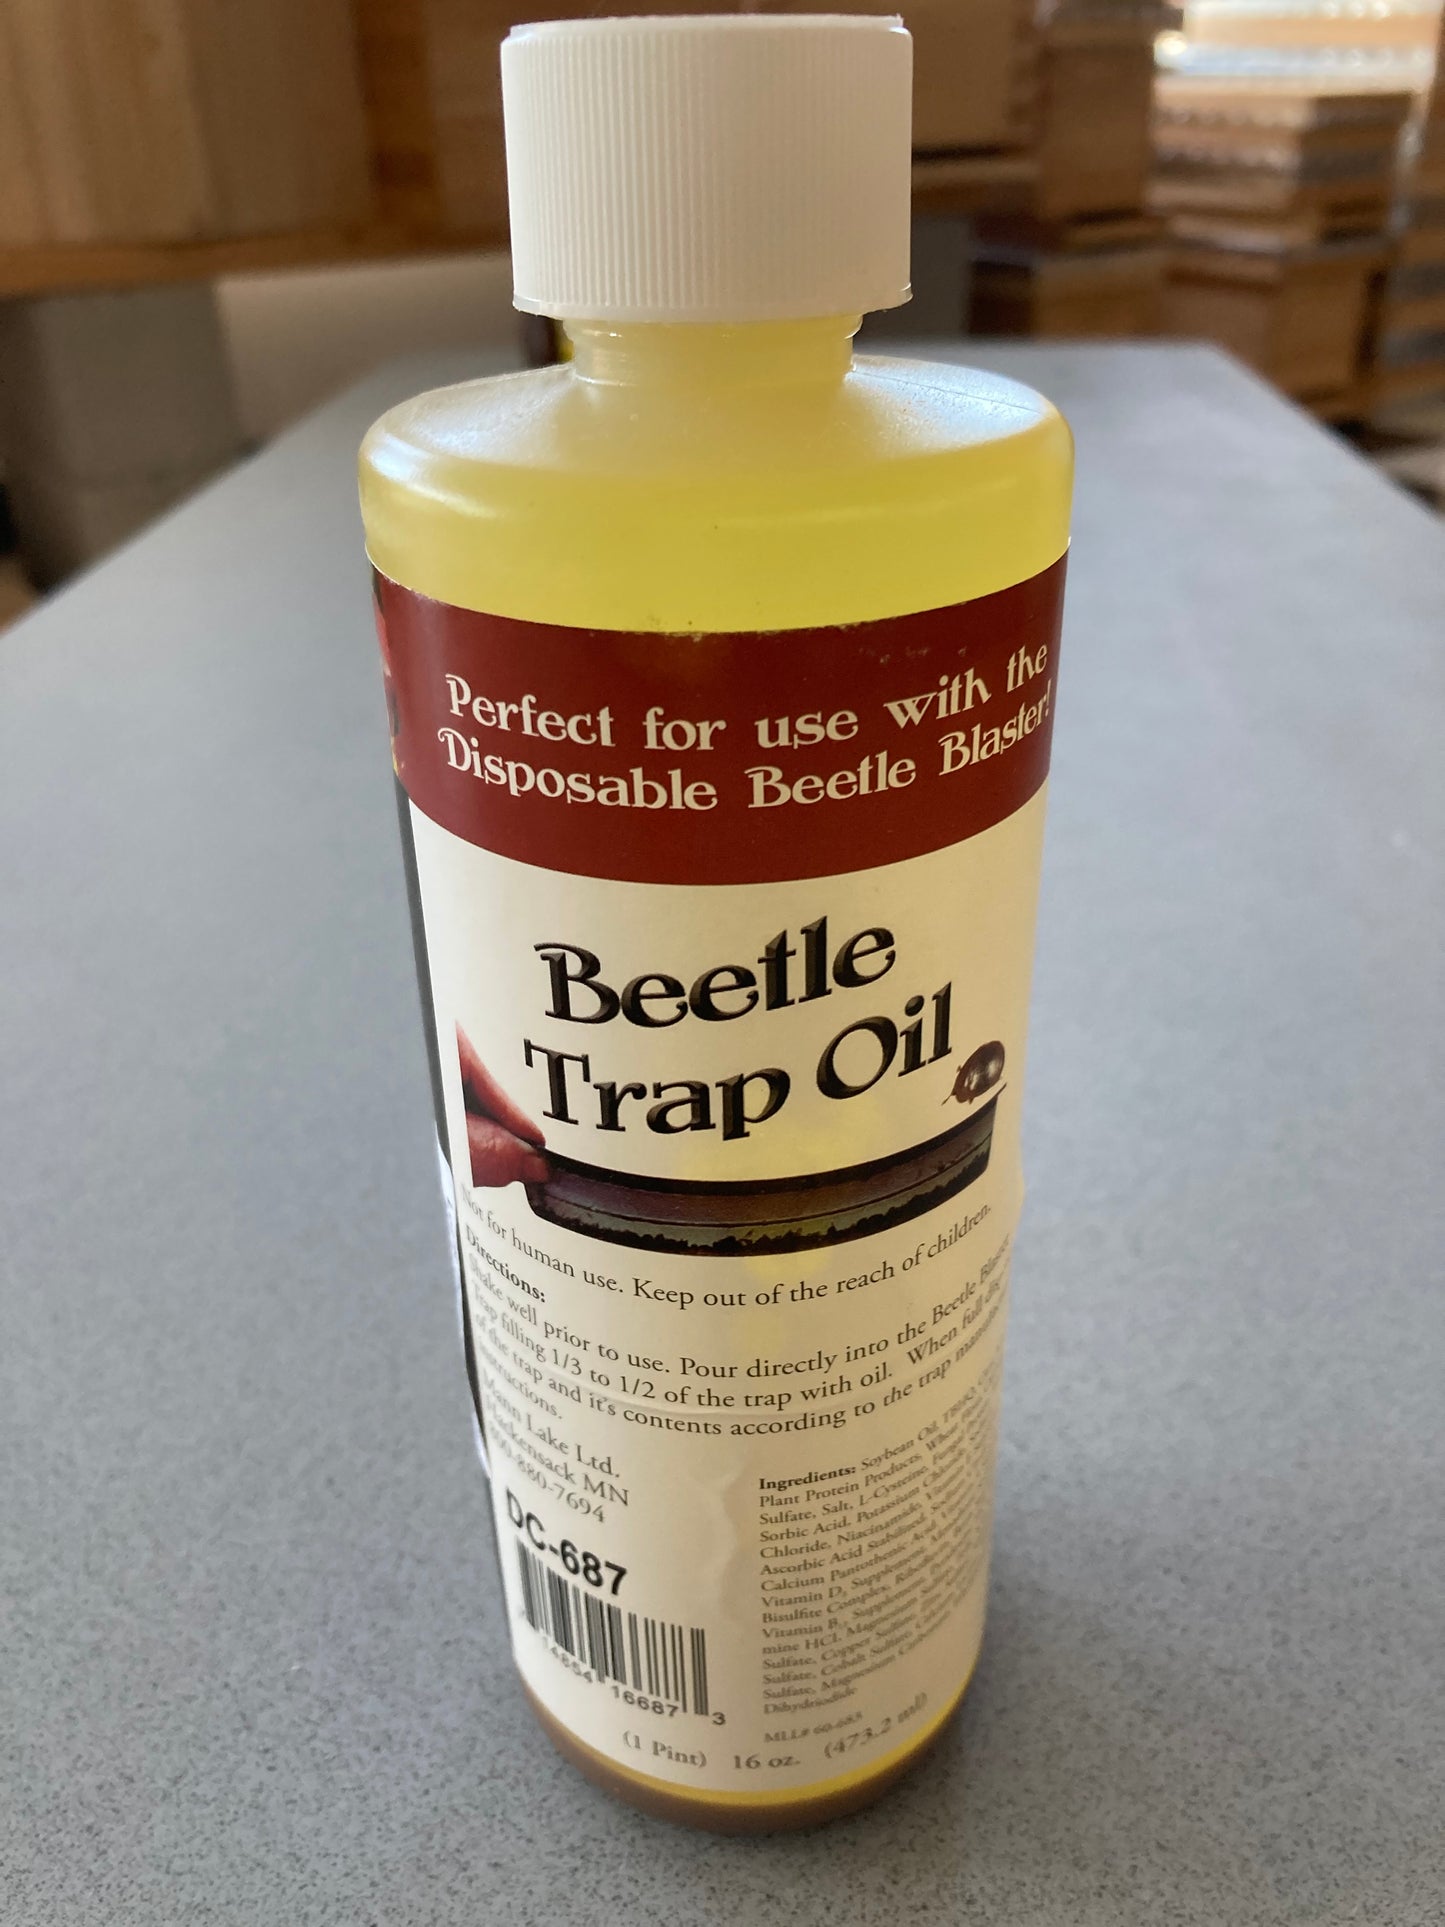 Beetle Trap Oil